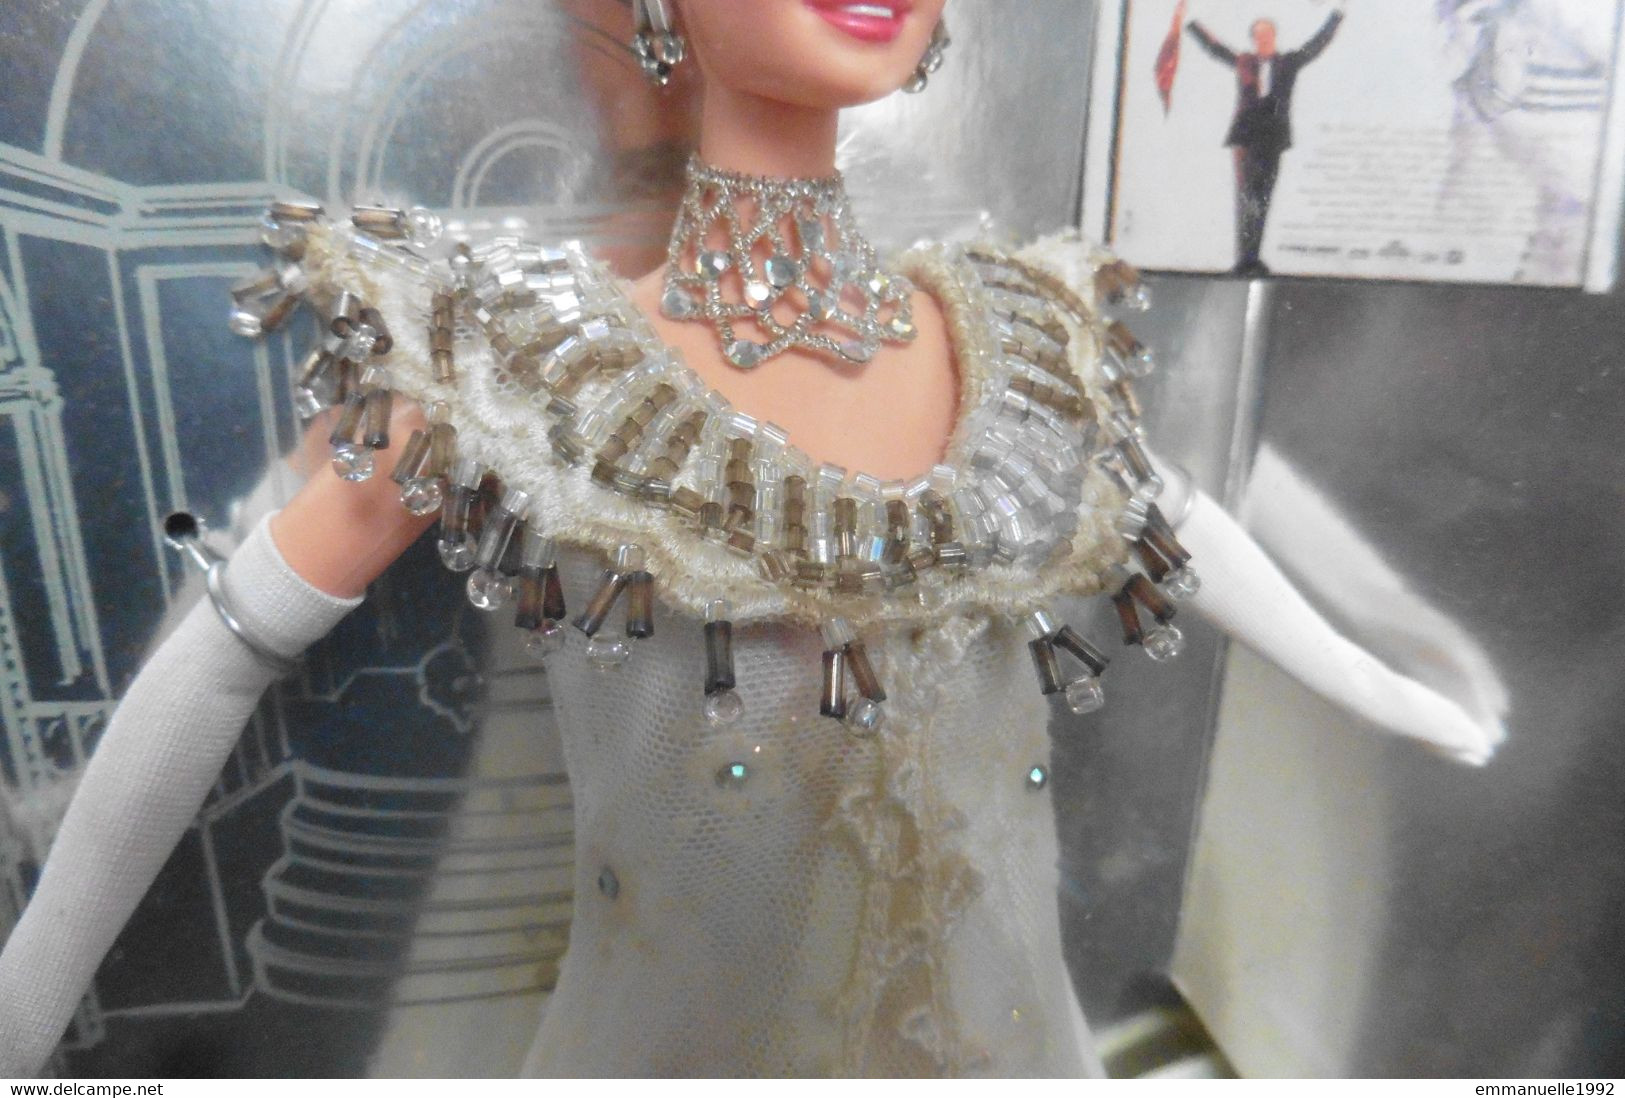 Barbie Audrey Hepburn as Eliza Doolittle in My Fair Lady 1995 robe de bal ball gown